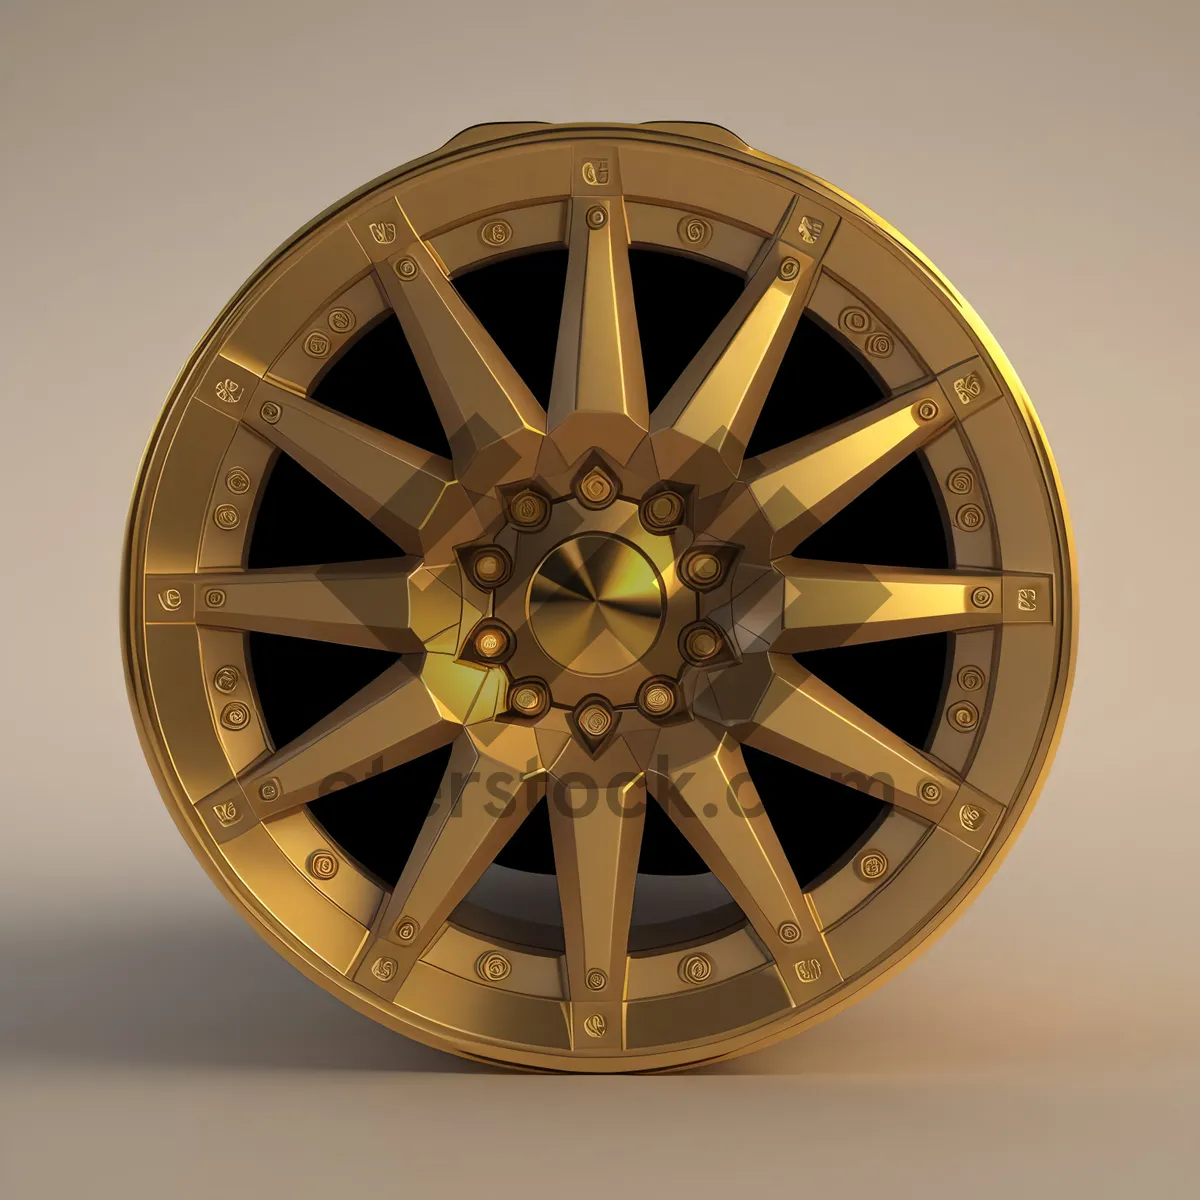 Picture of Metallic Film Reel Wheel on Car Mechanism